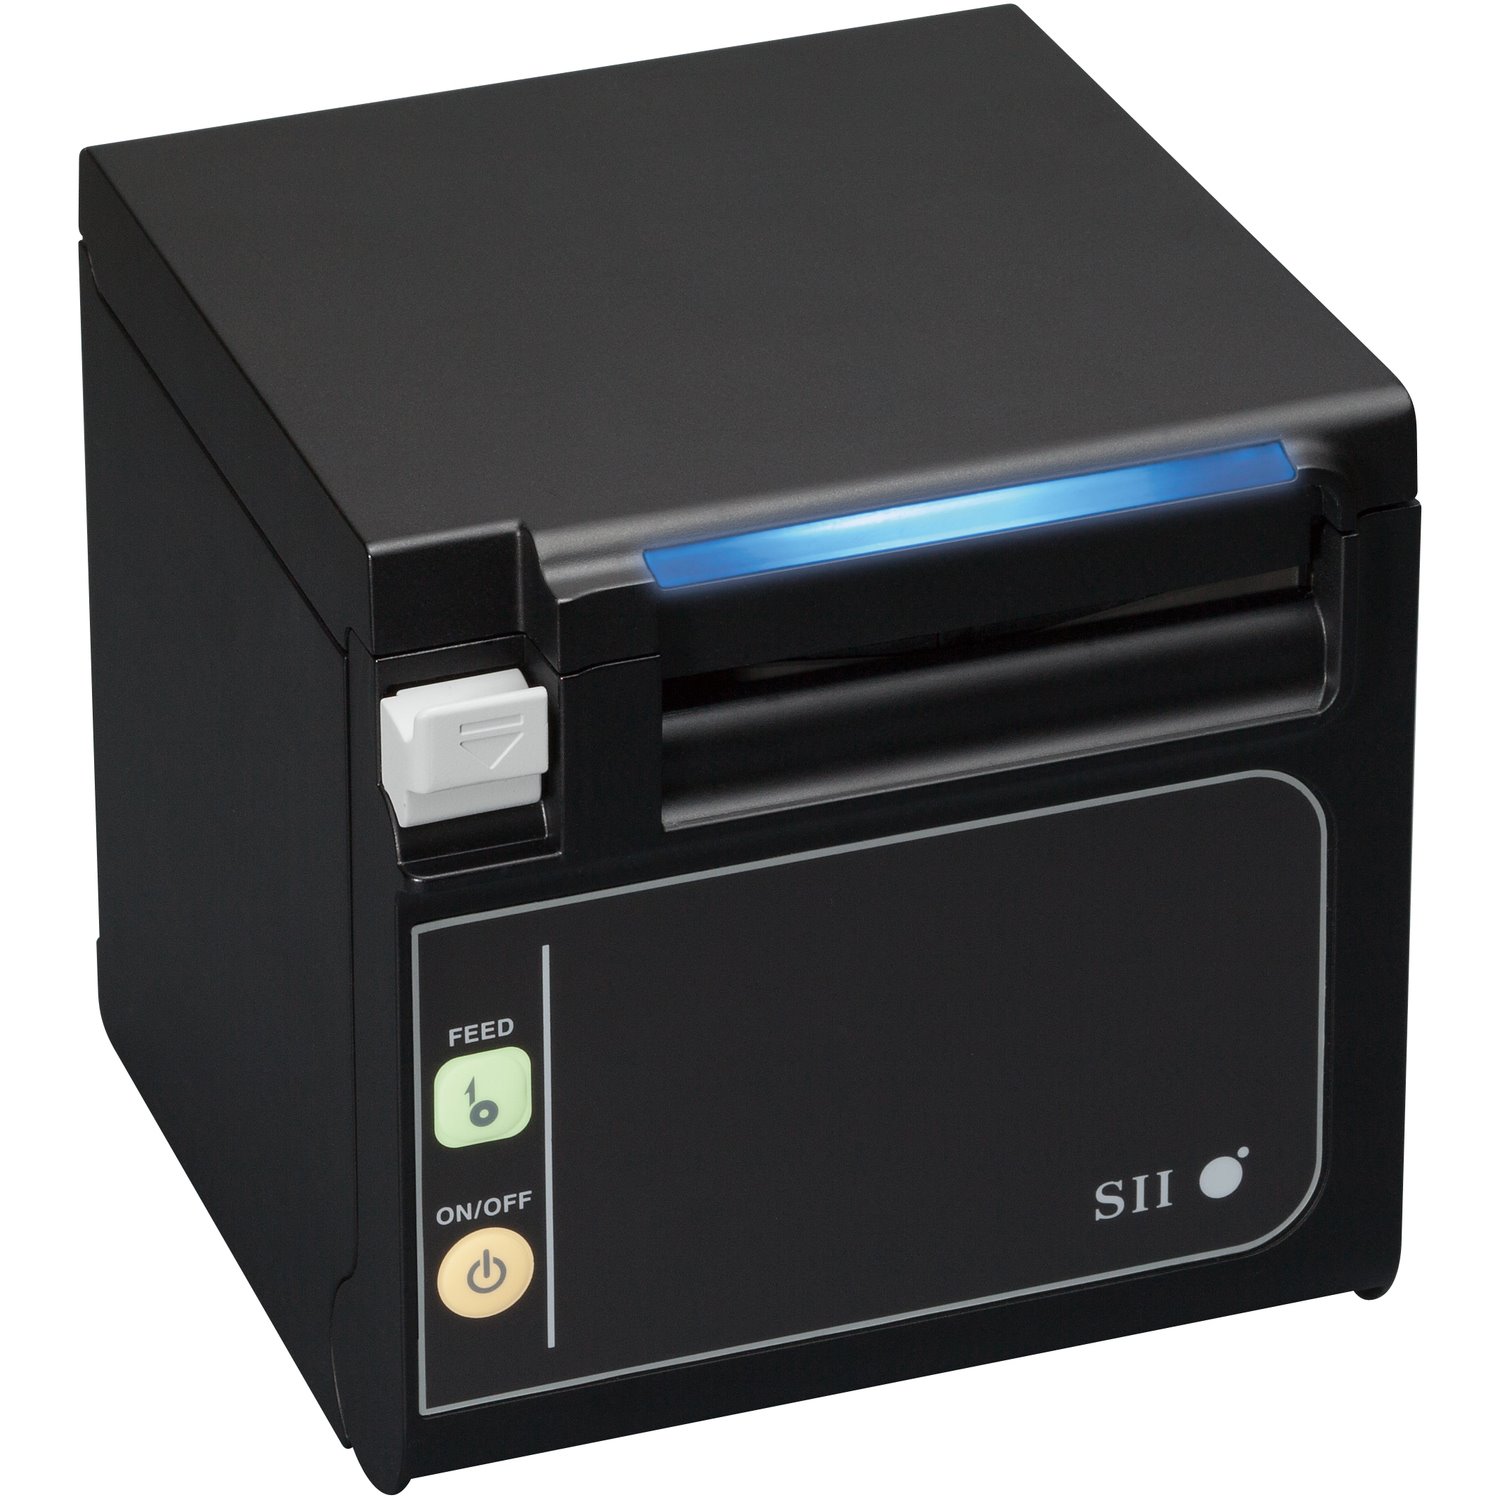 Seiko RP-E11 High Speed Ethernet POS Printer